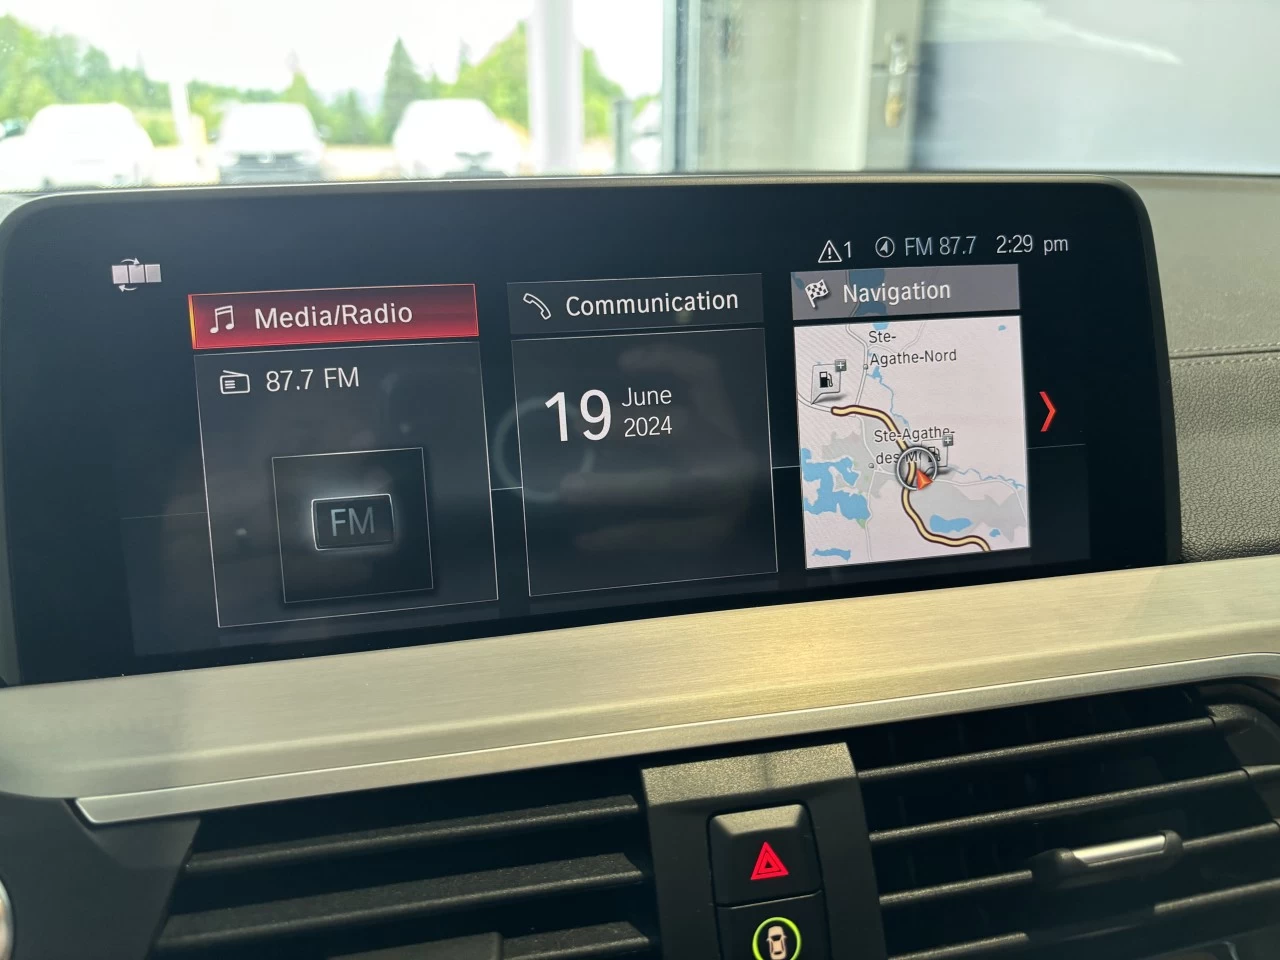 2019 BMW X3 M40i Image principale